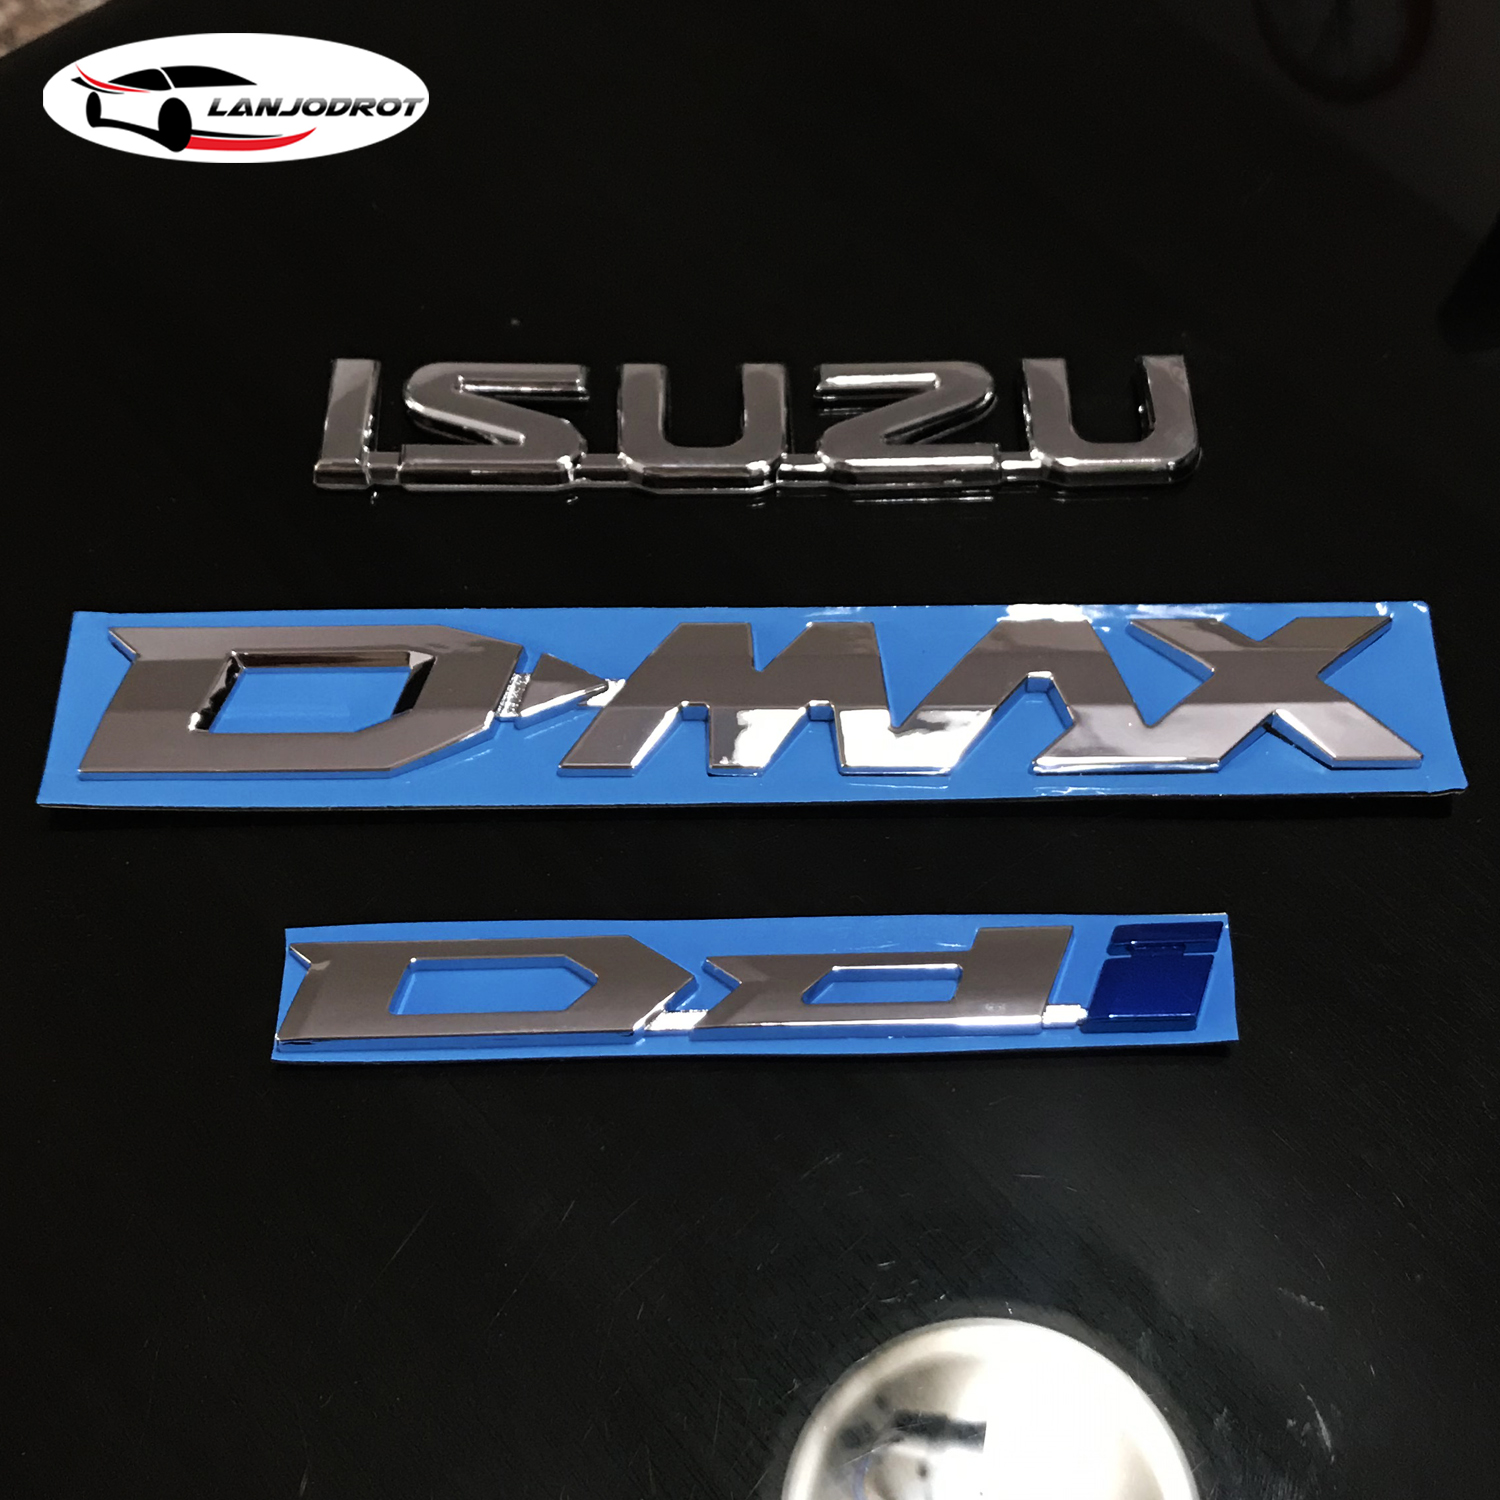 All New Isuzu D-MAX 2020 ชุด 3 ชิ้น ป้ายโลโก้ ตัวนูน ISUZU D-MAX Ddi ติดท้ายรถกระบะ สีโครเมี่ยม